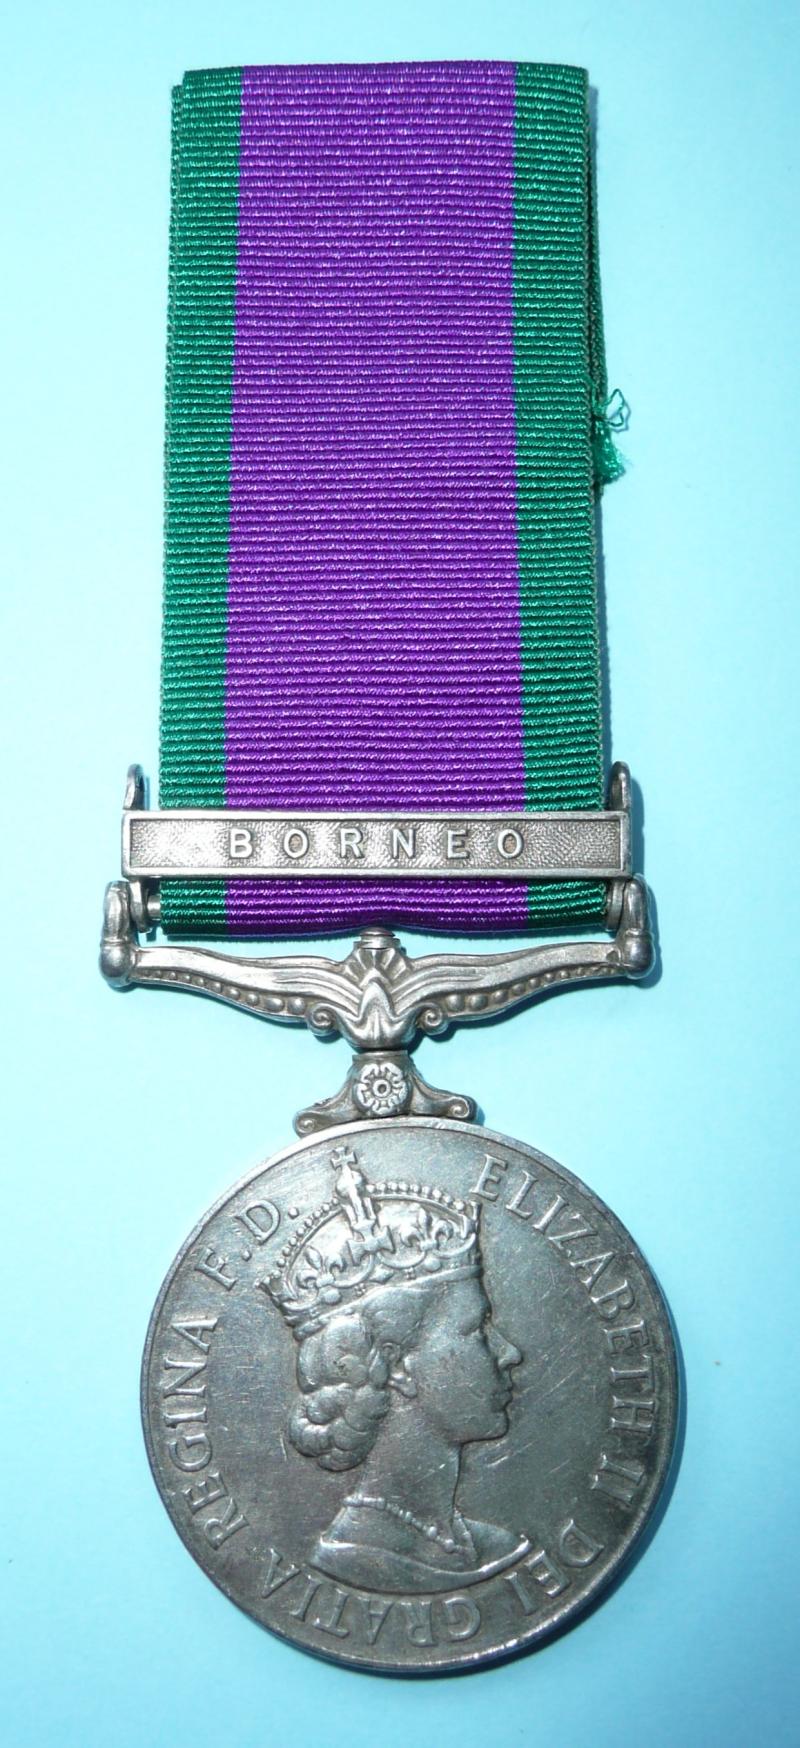 Campaign Service Medal - Clasp Borneo - Gurkha Engineers